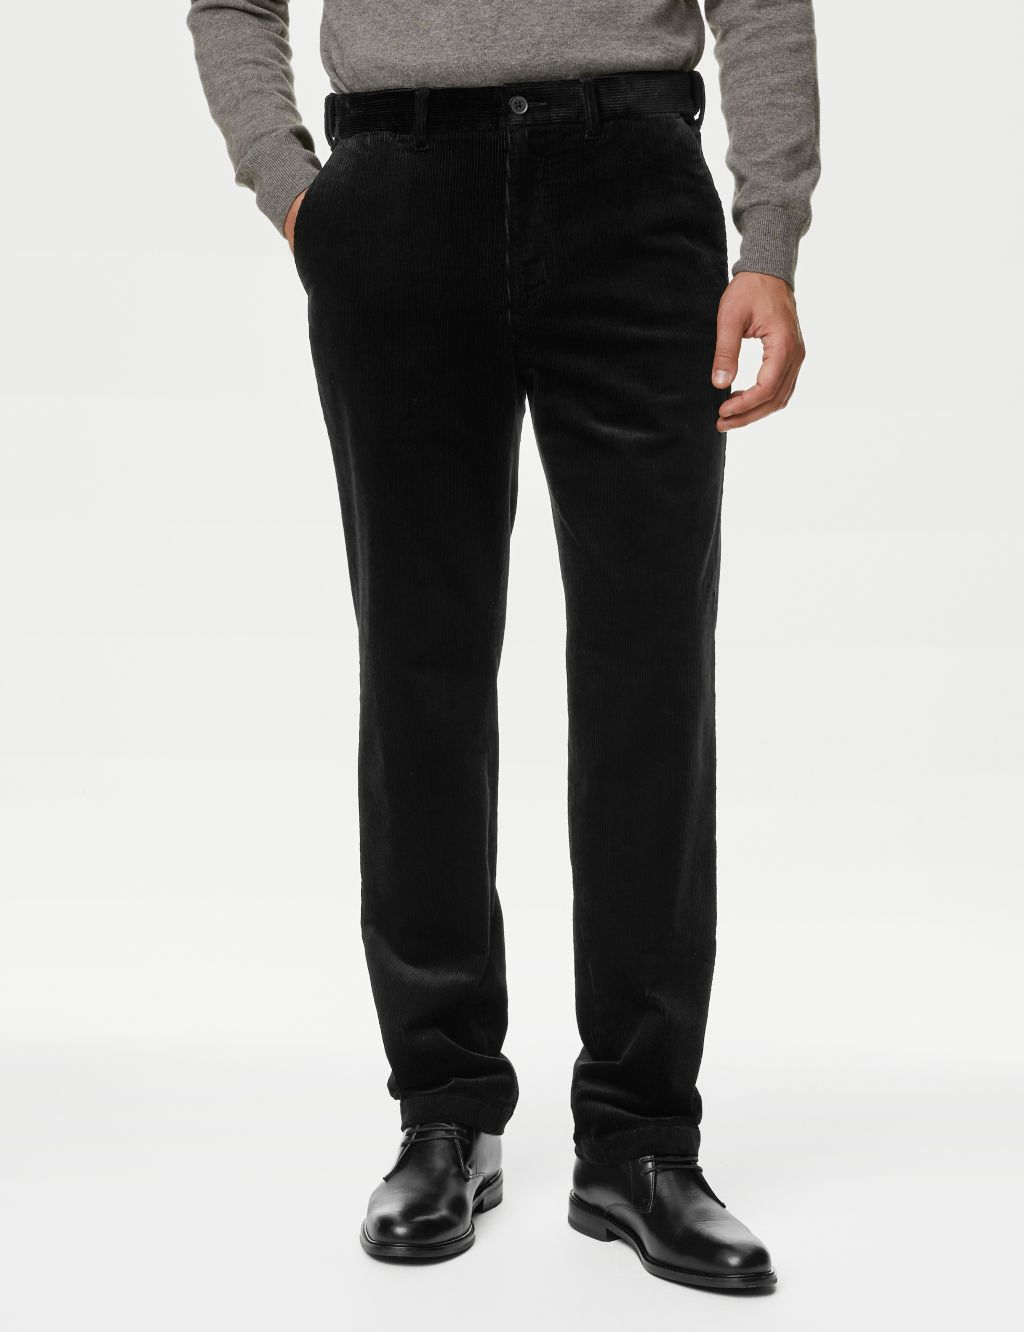 Regular Fit Luxury Corduroy Trouser image 1